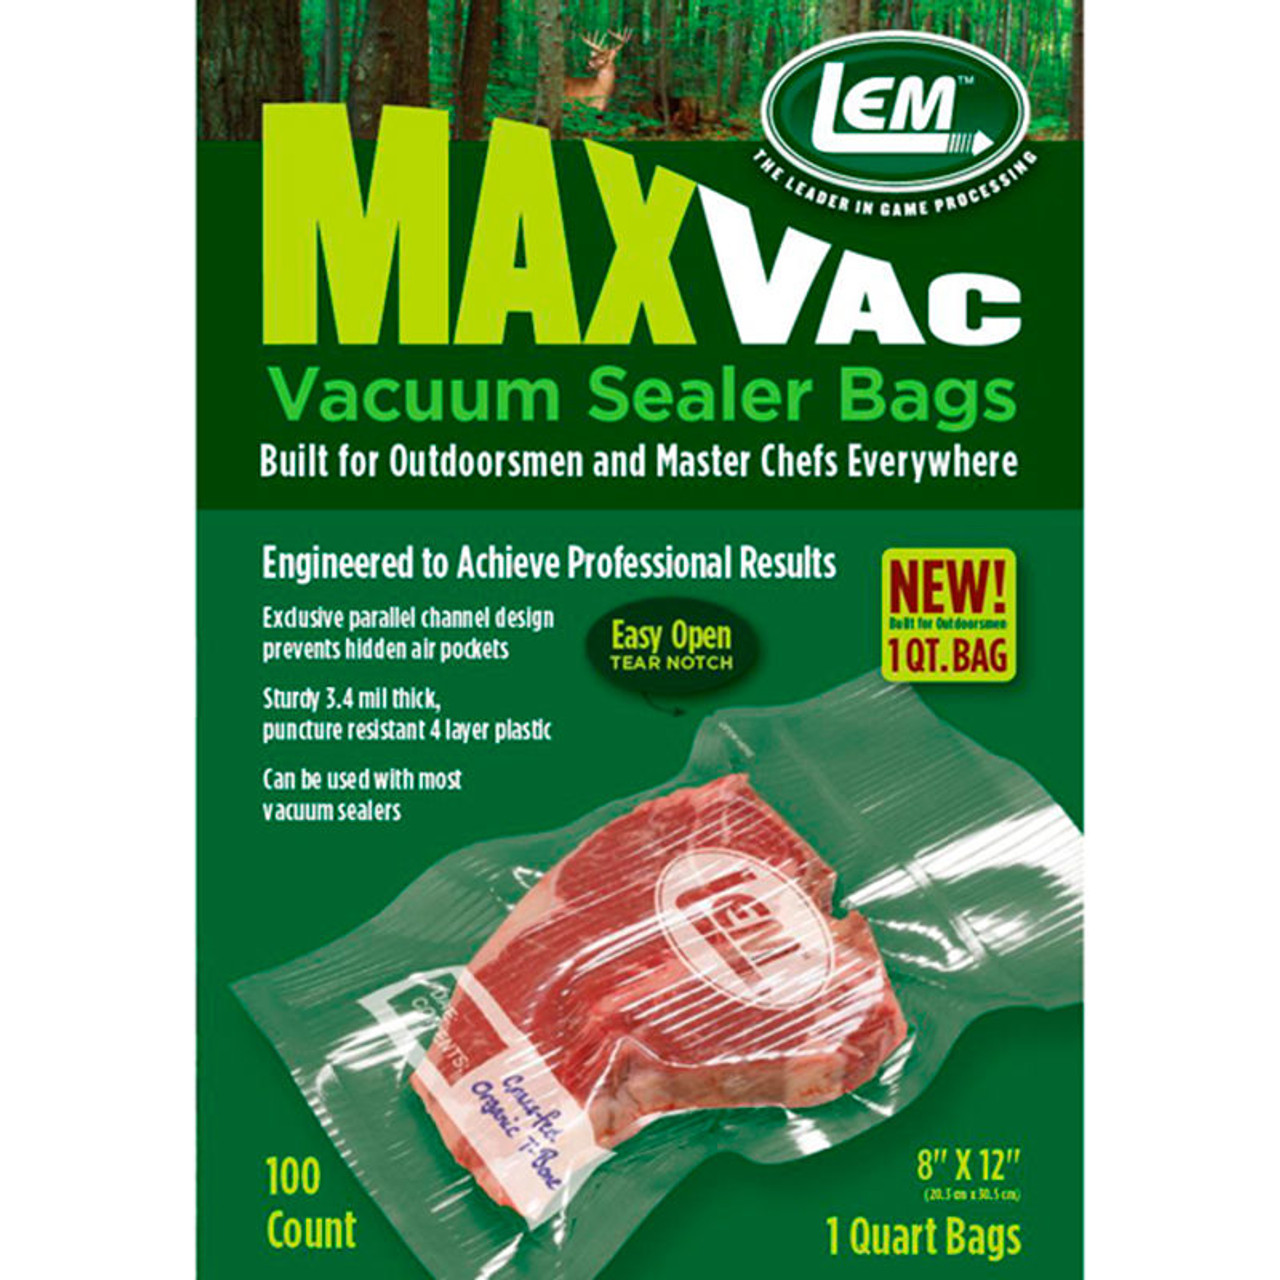 Lem MaxVac Quart Vacuum Bags (44-Count)